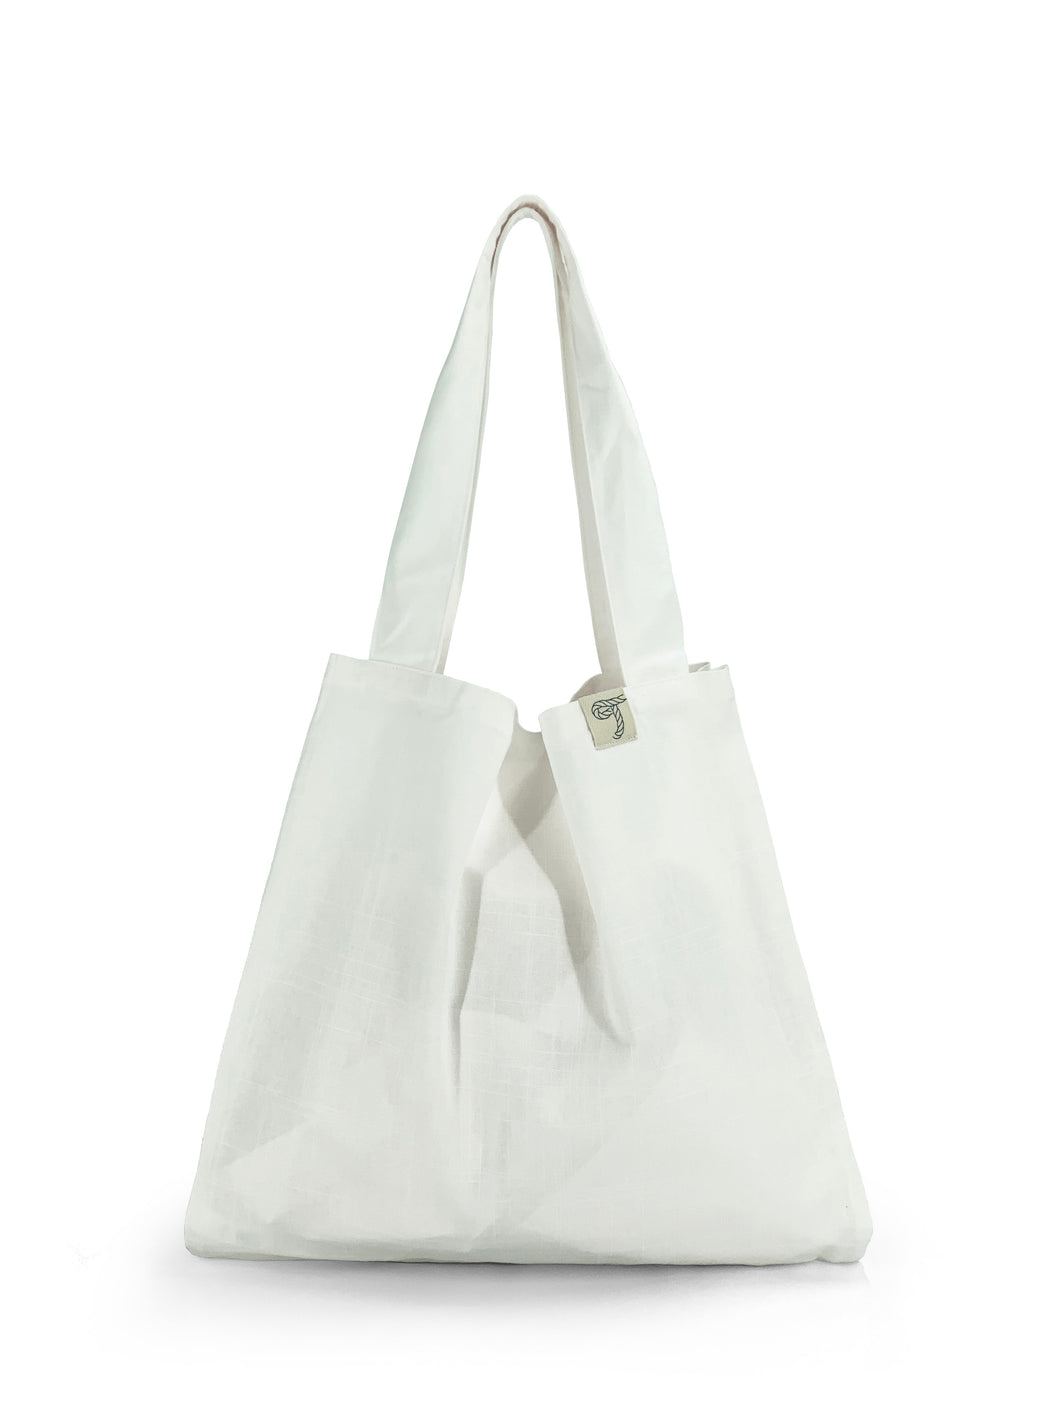 Natural Shopping Bag - White